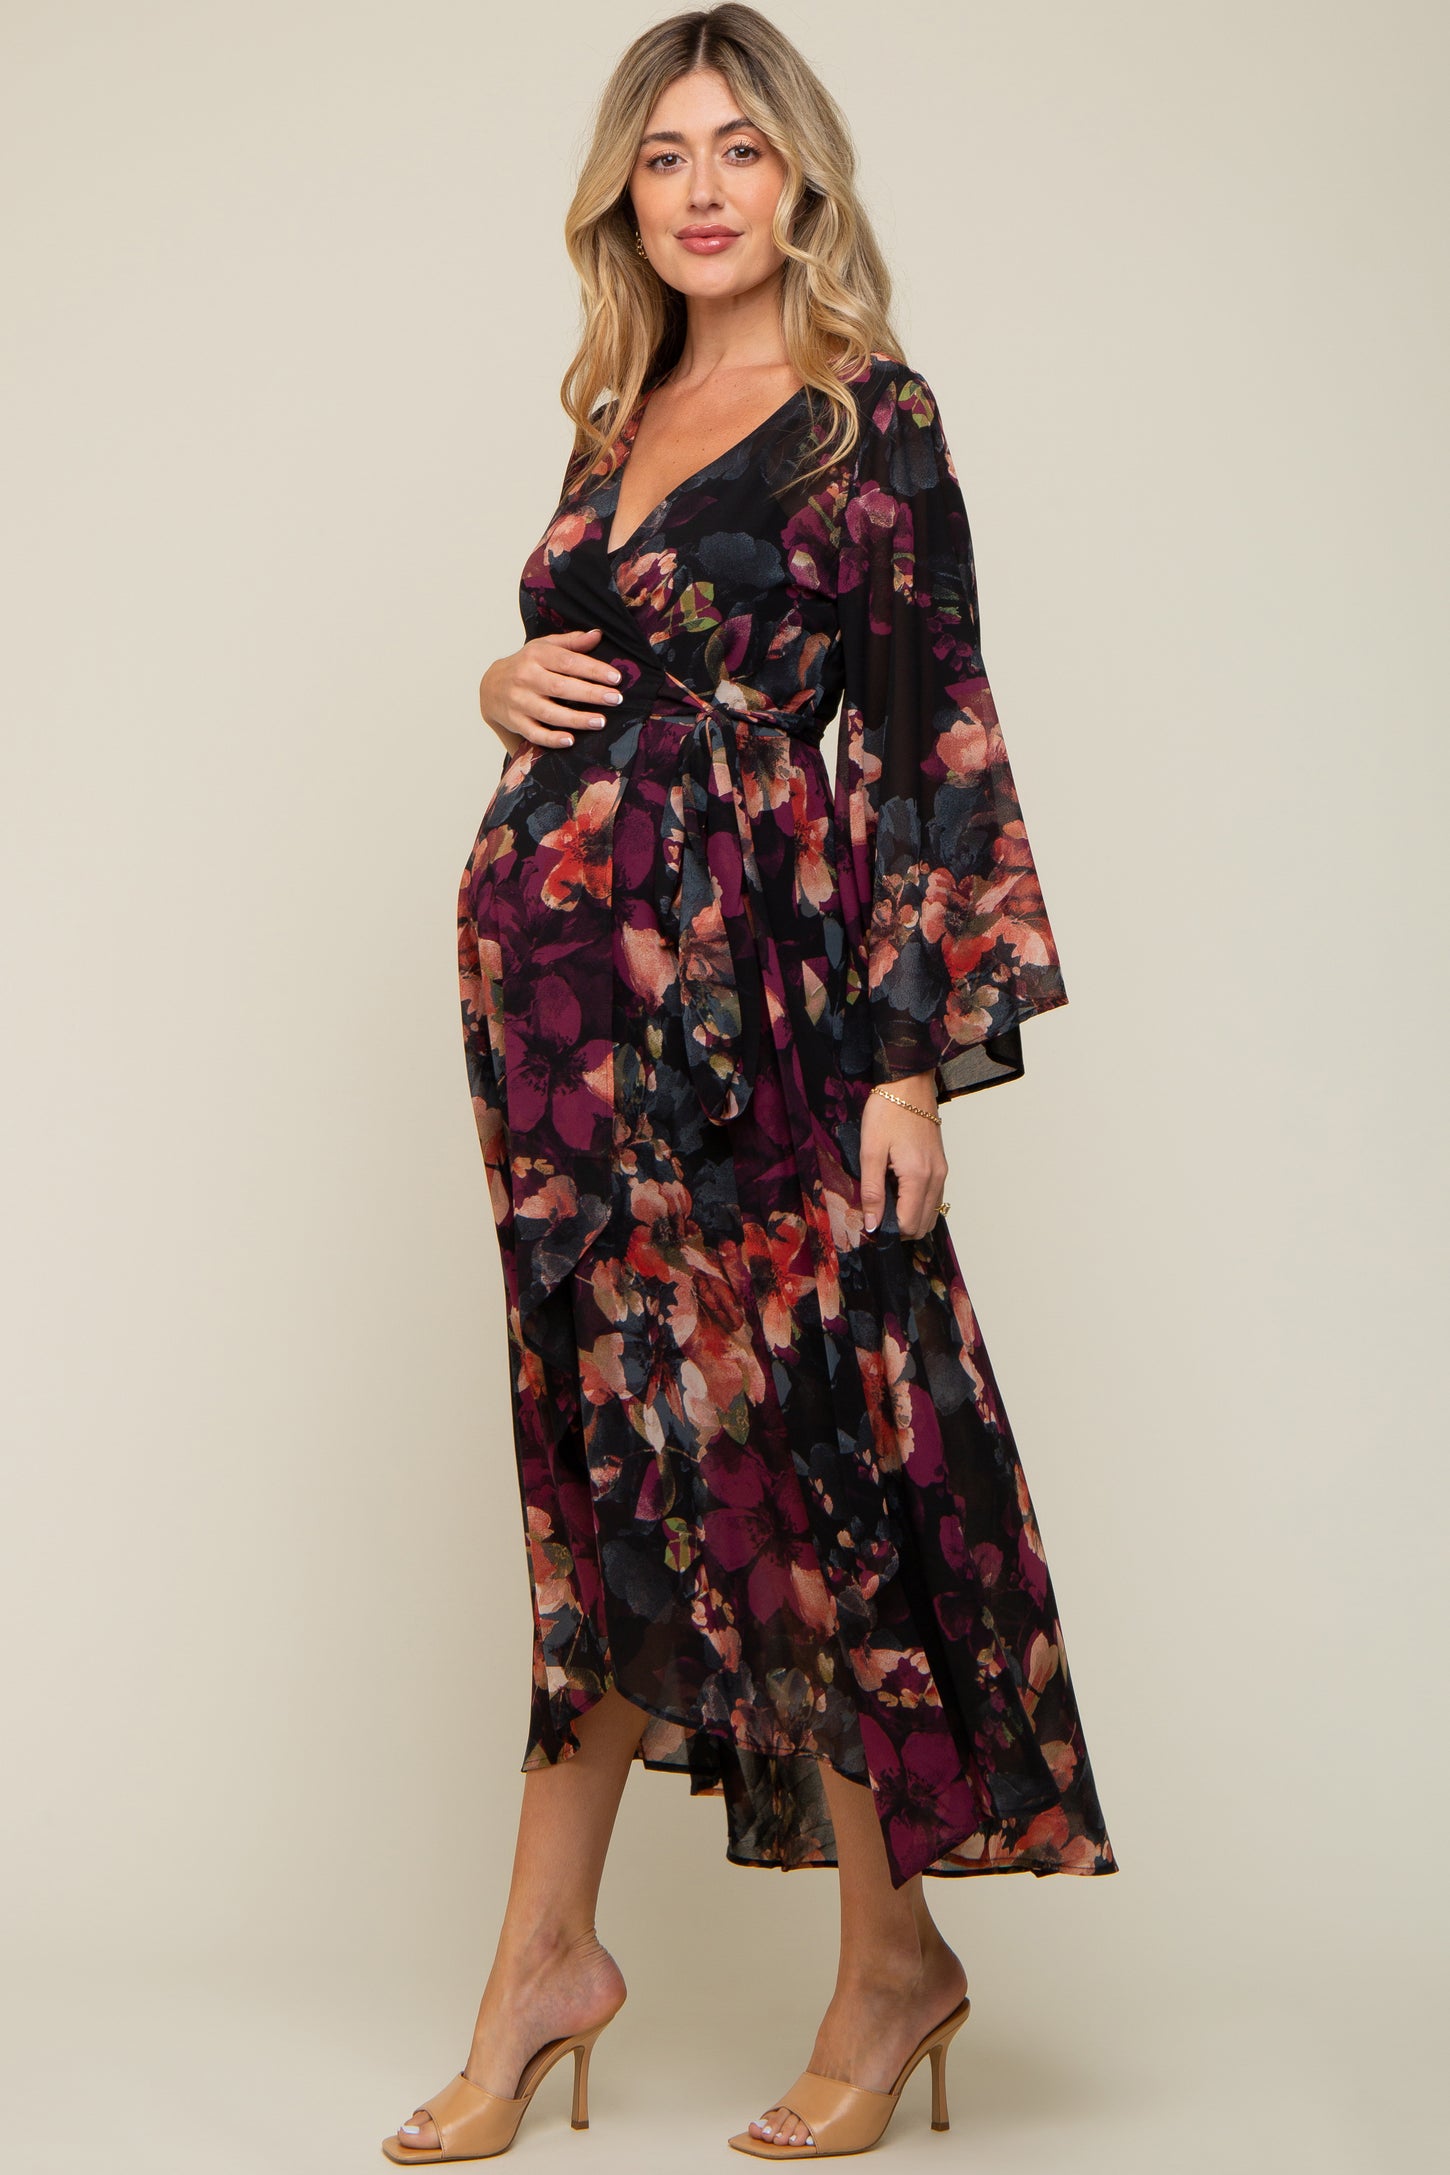 PinkBlush Burgundy Lace Overlay Maternity Wrap Dress